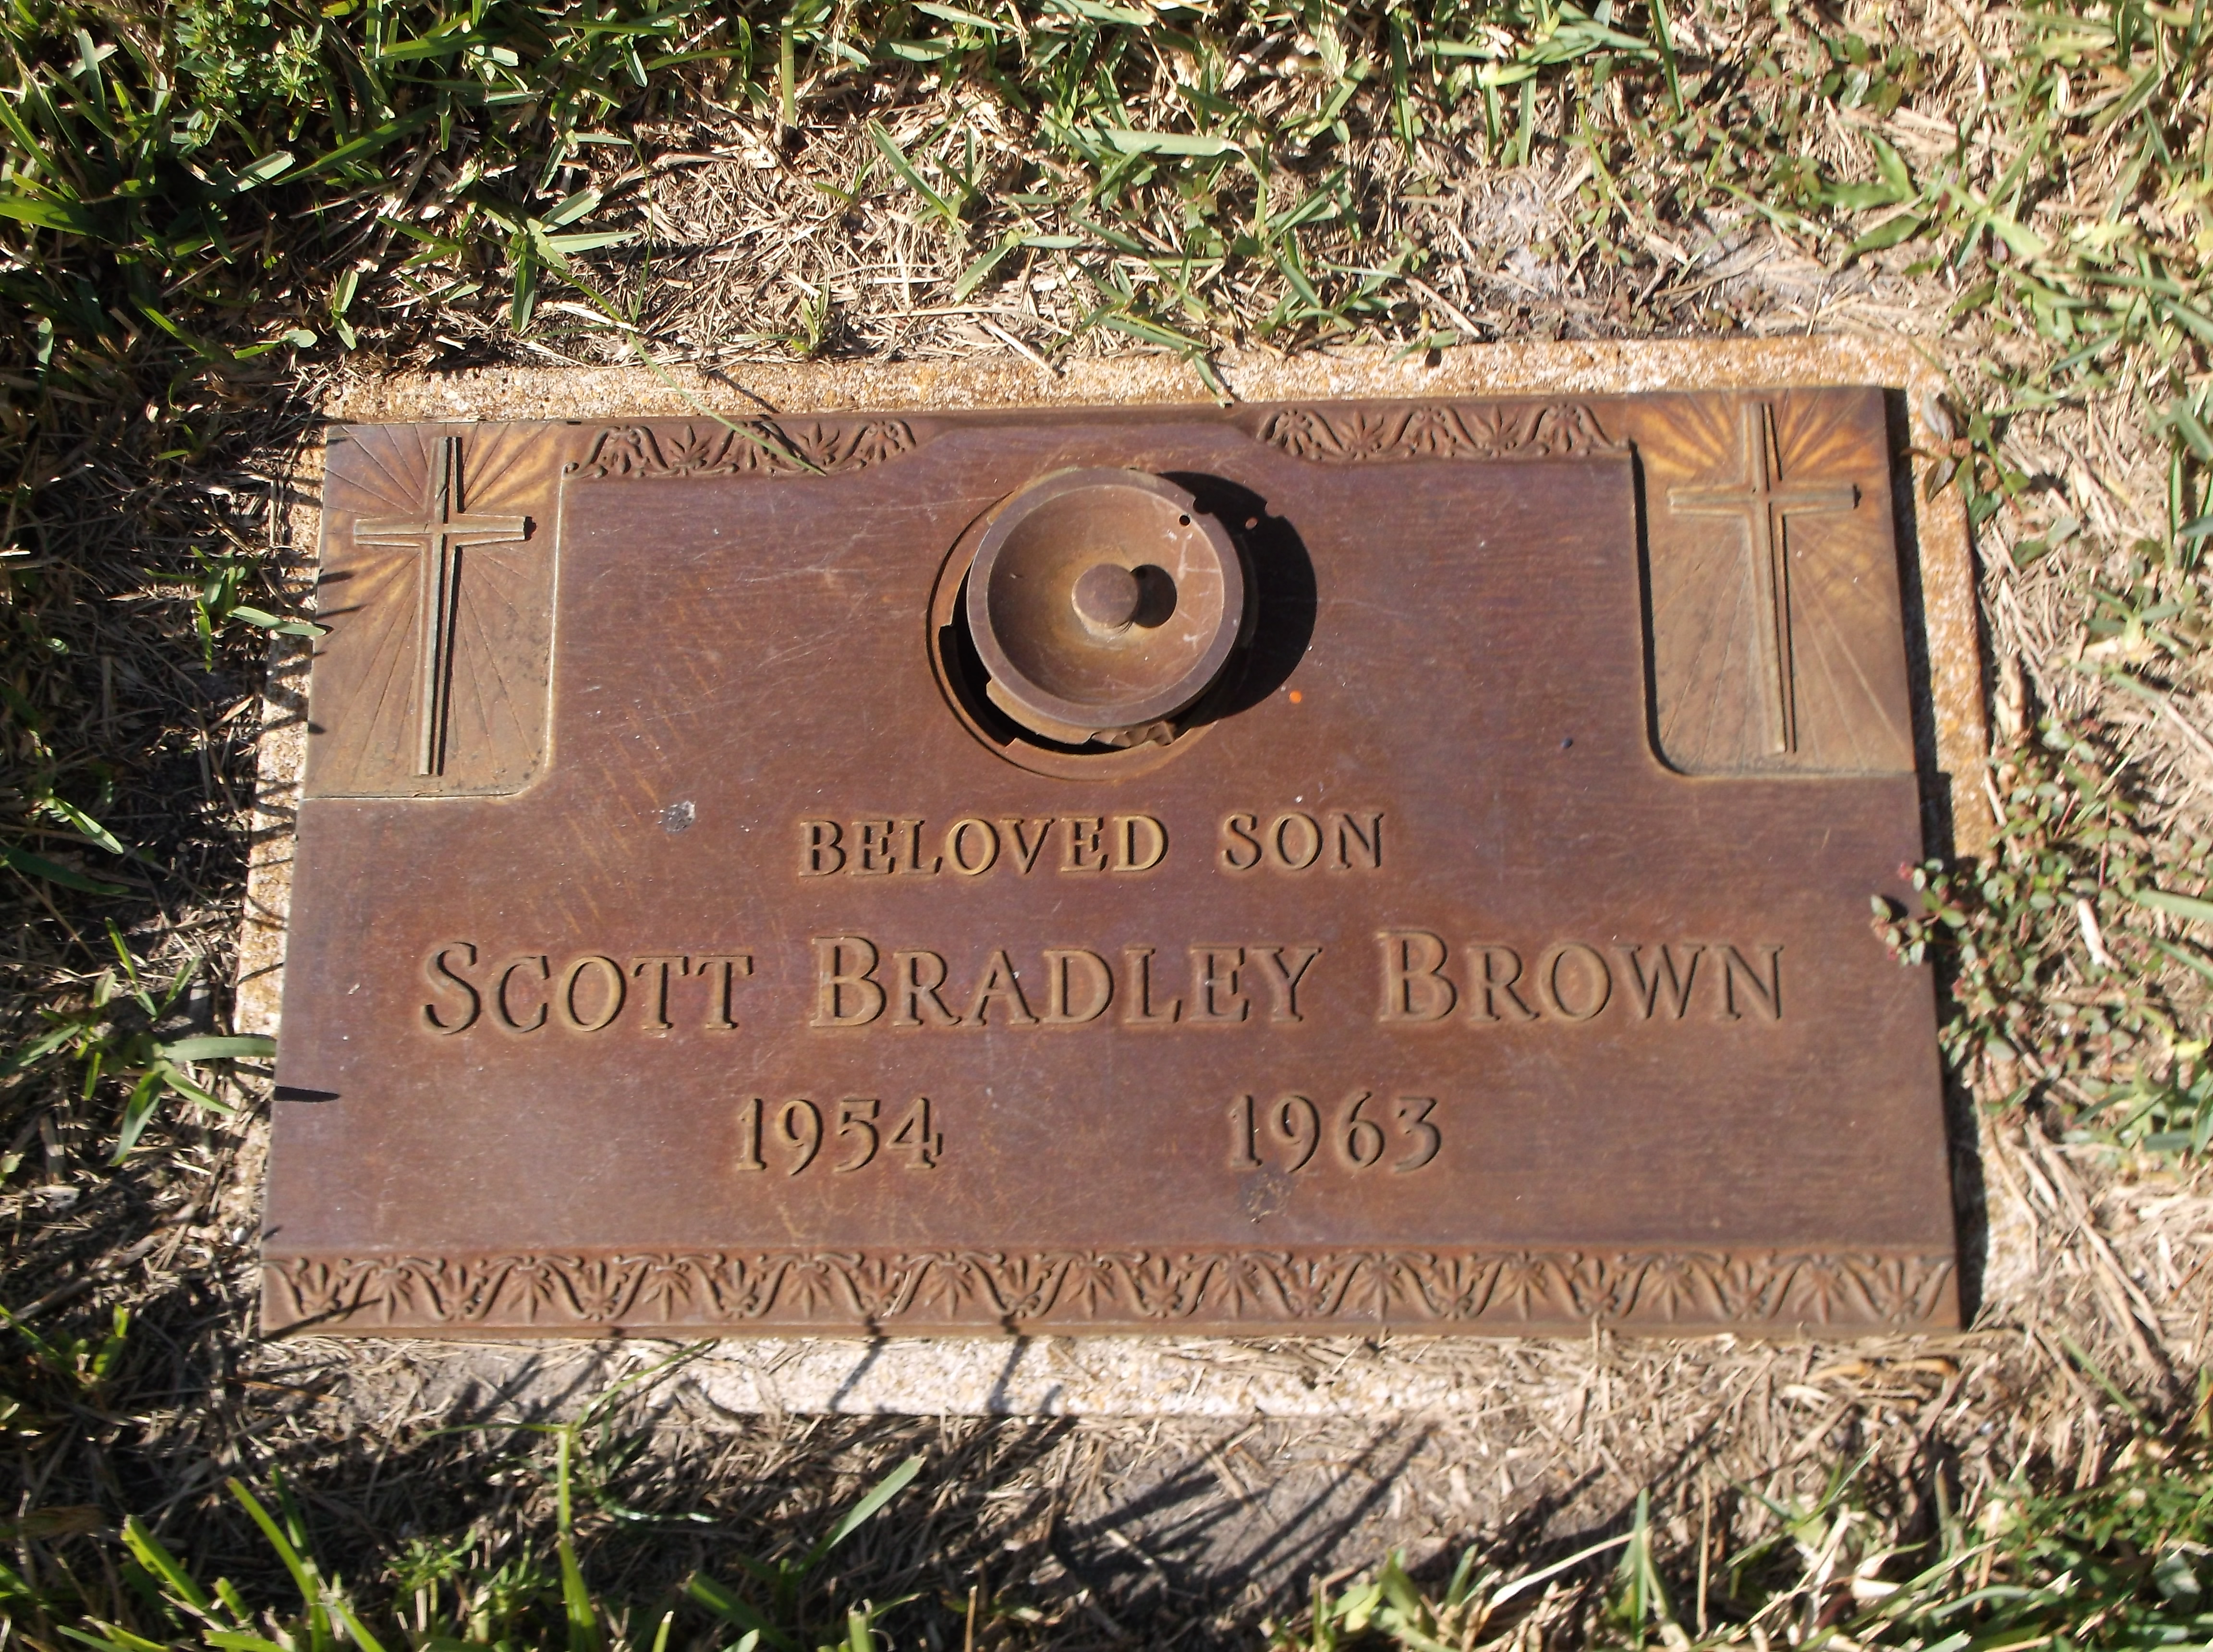 Scott Bradley Brown